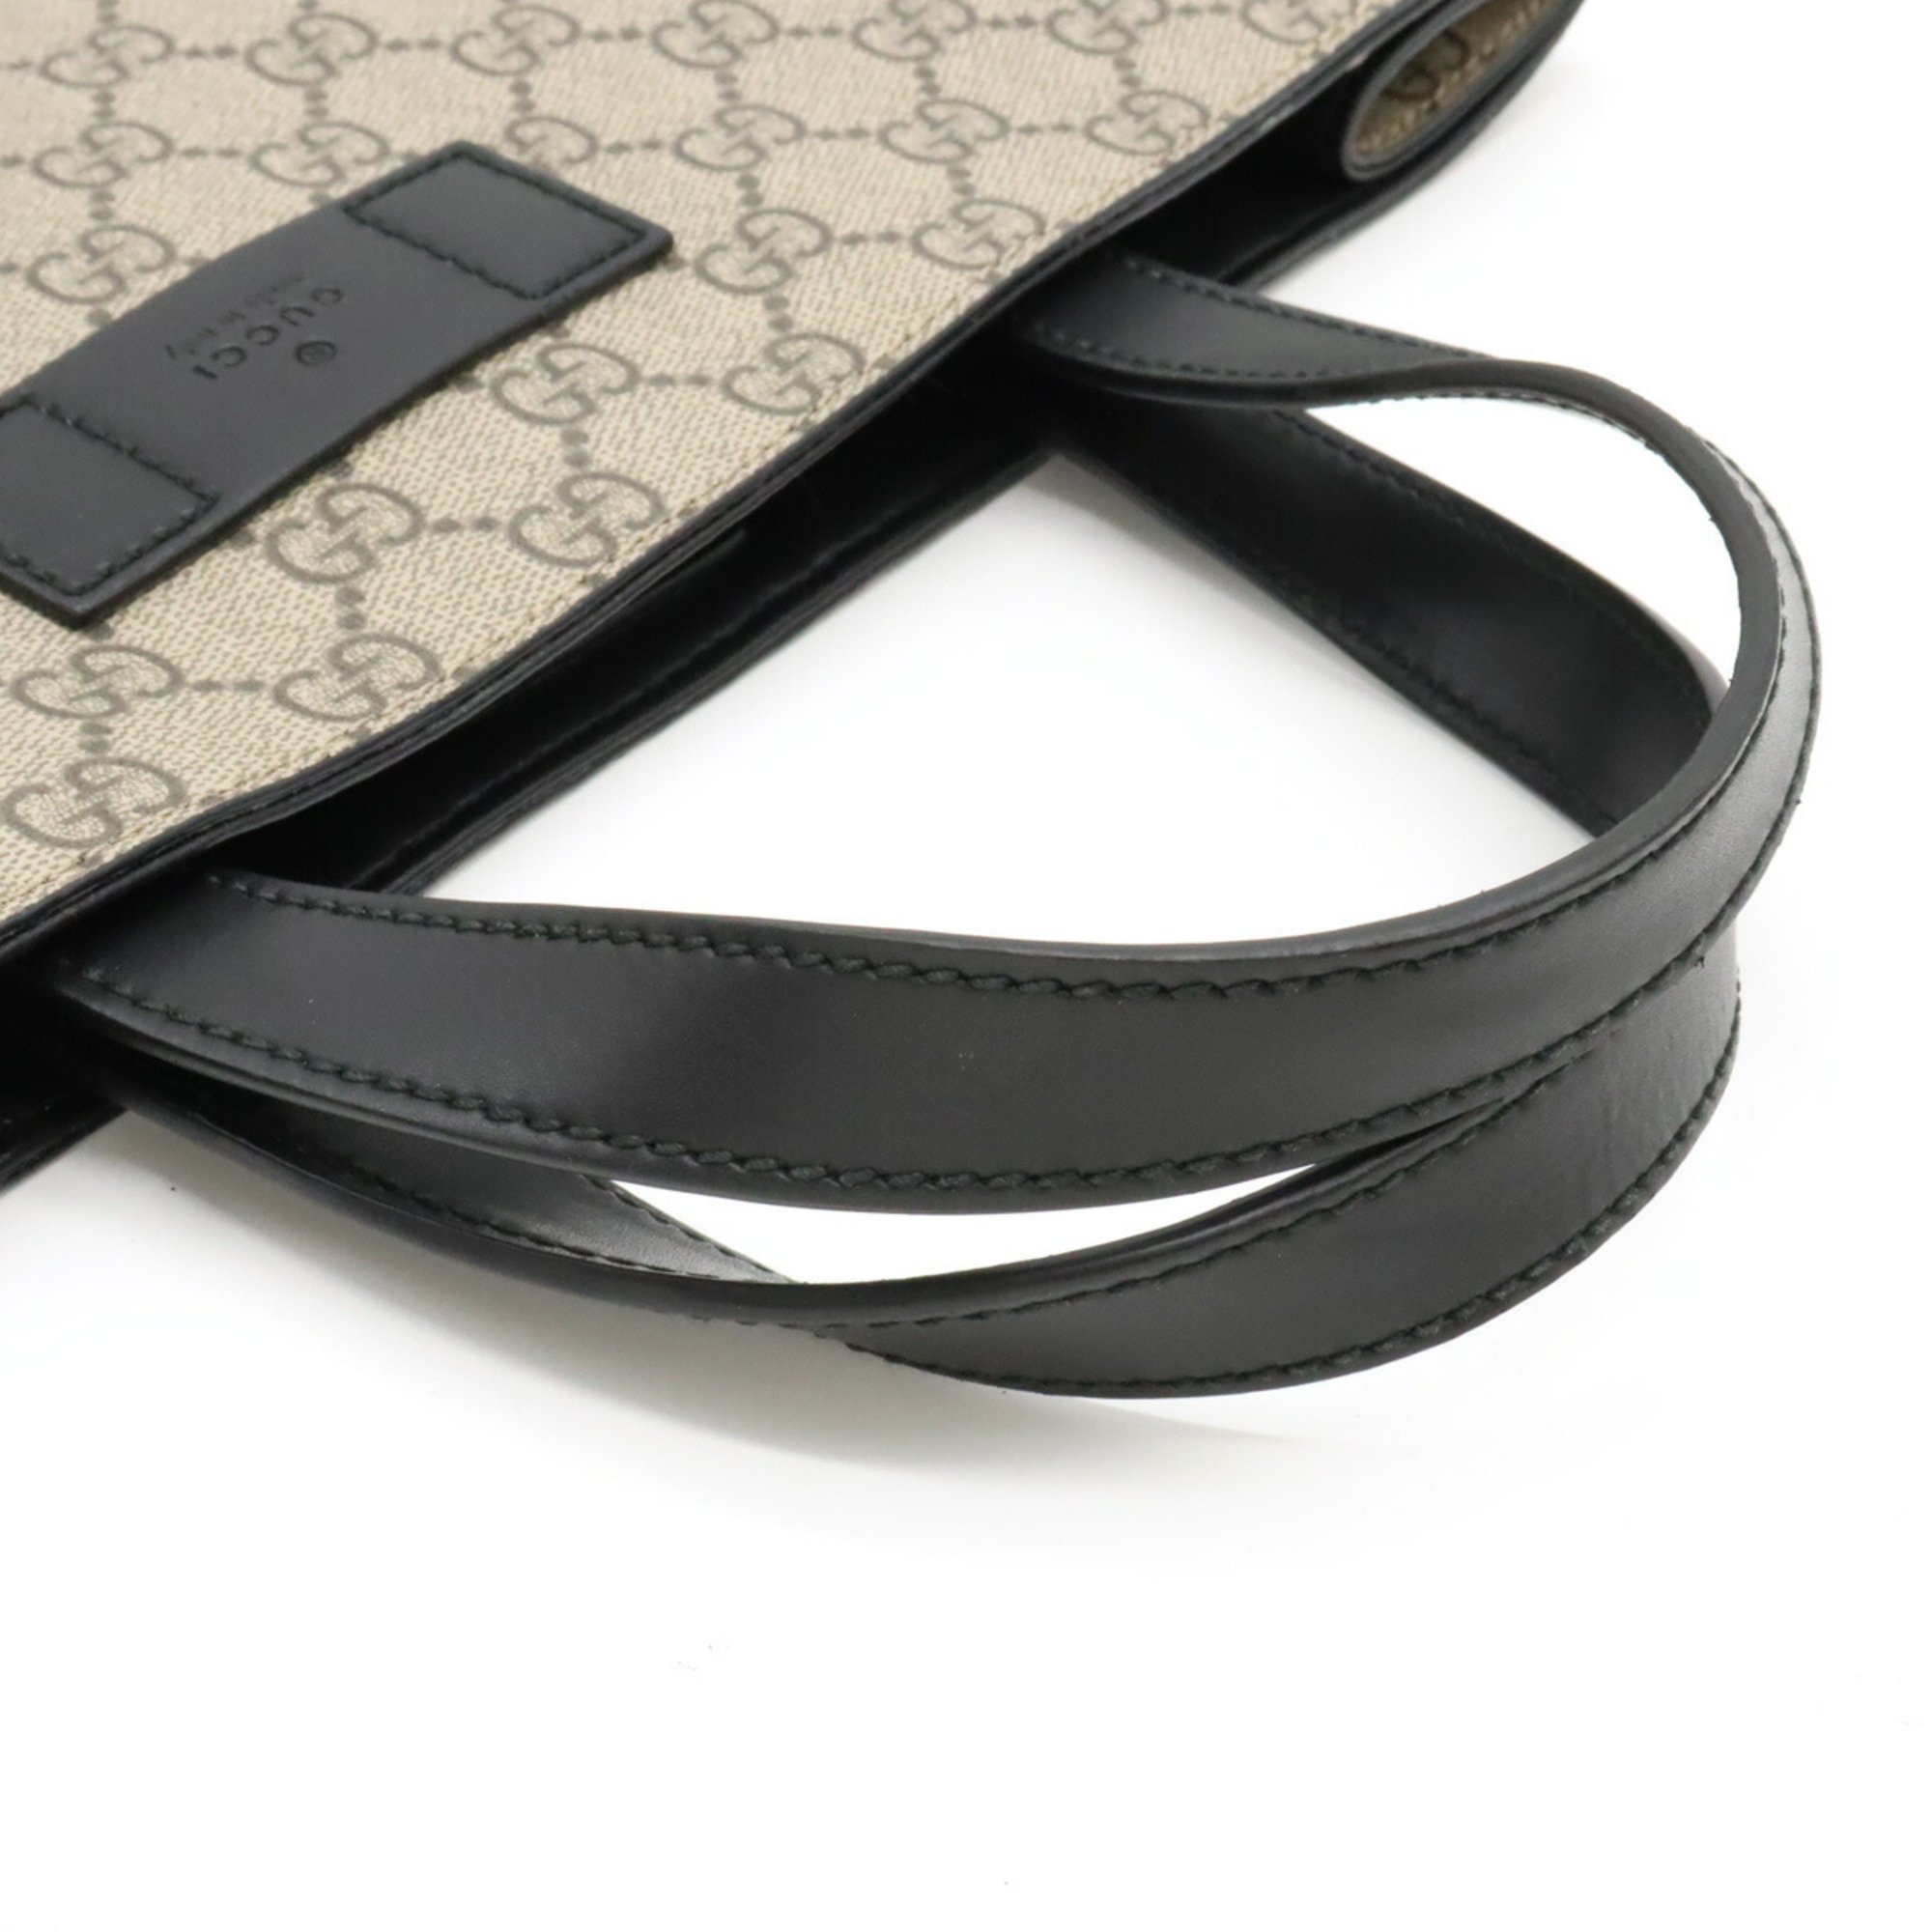 GUCCI Soft GG Supreme Tote Bag Shoulder PVC Leather Khaki Beige Black 456217